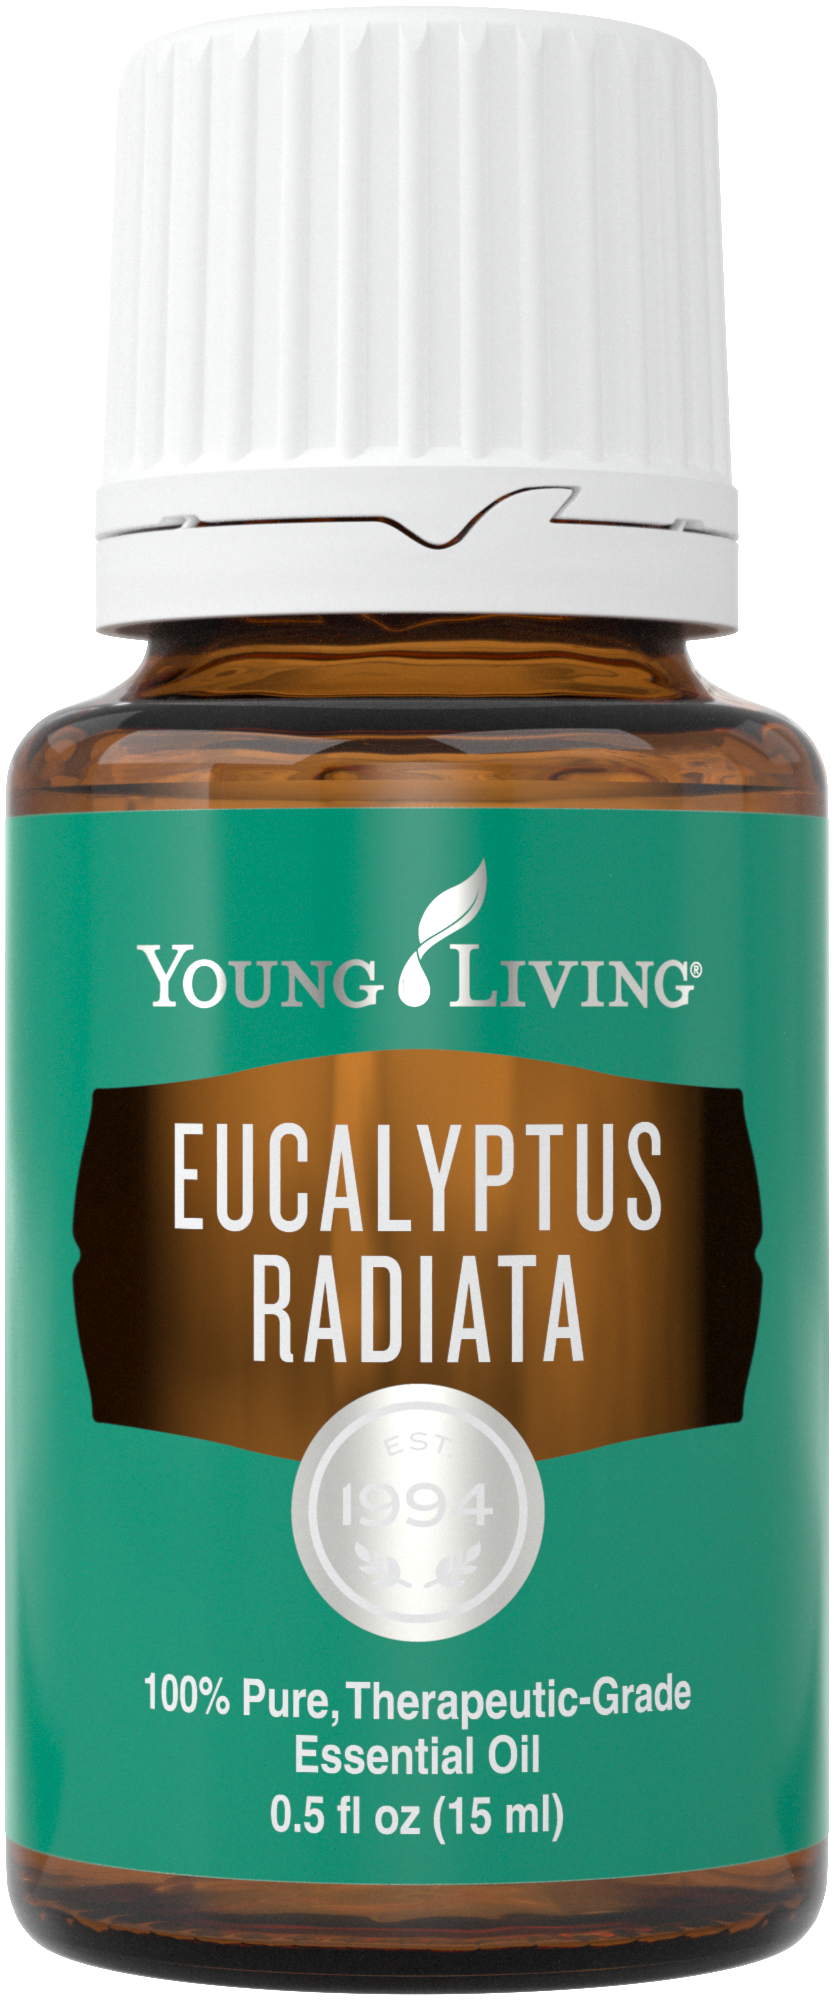 Eucalyptus Radiata essential oil uses | Young Living